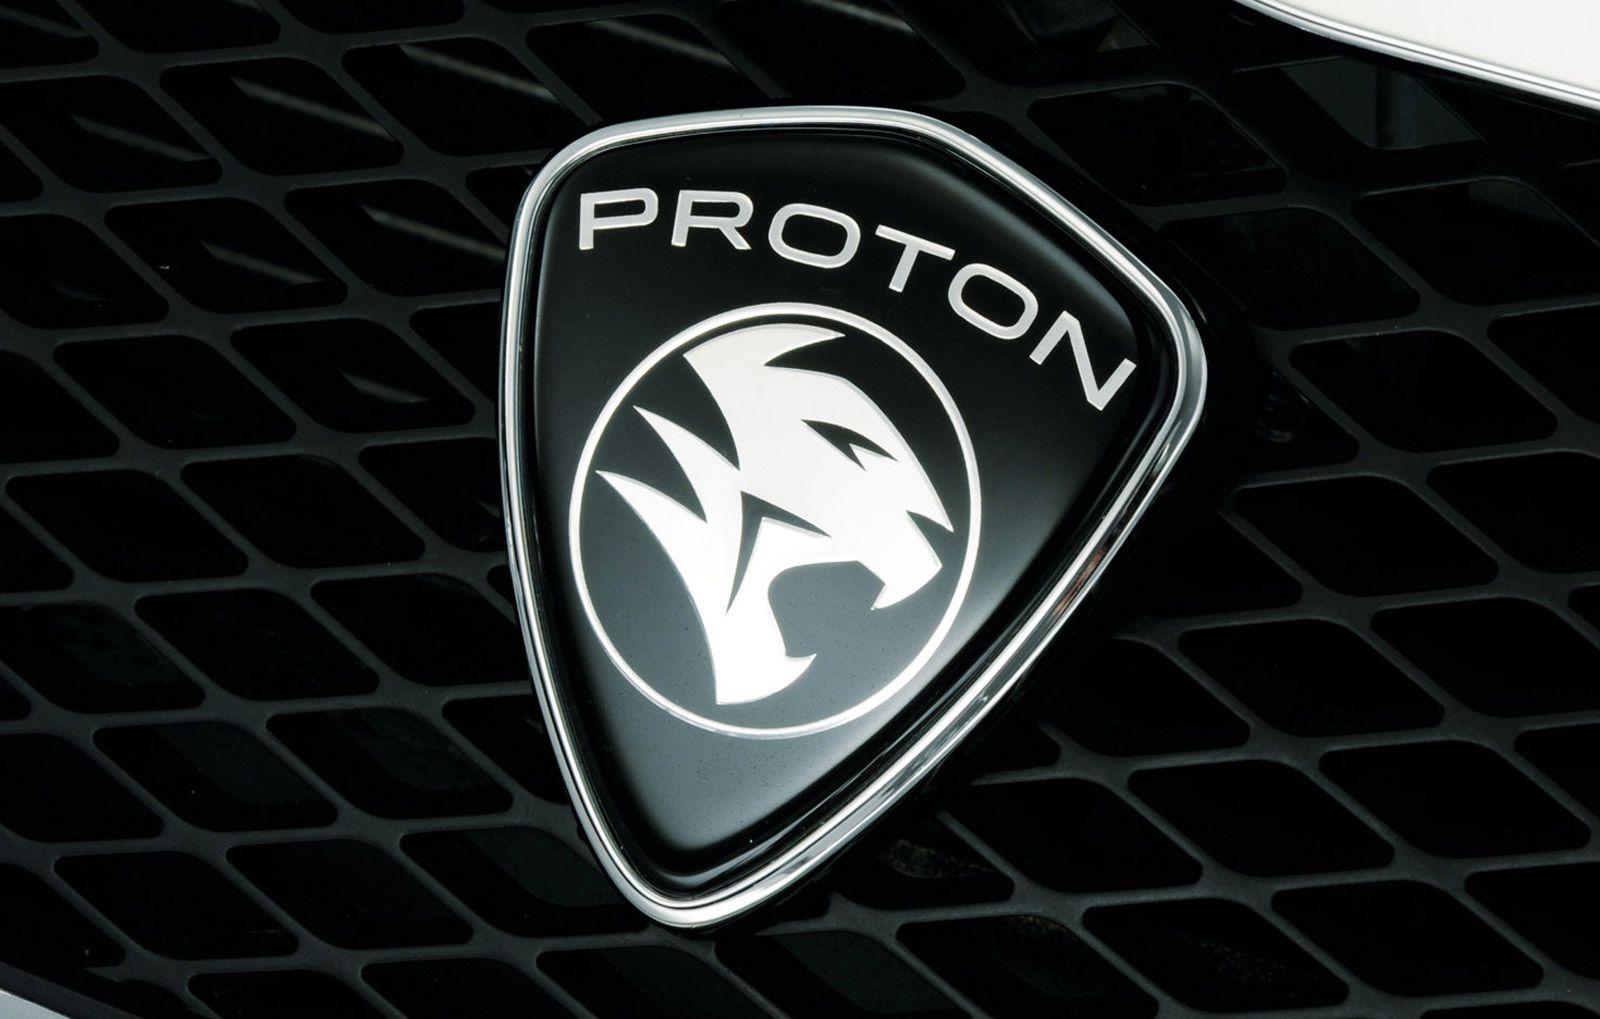 Malaysian Car Company Logo - Lotus Parent Company Proton Sold To Malaysian Conglomerate DRB Hicom